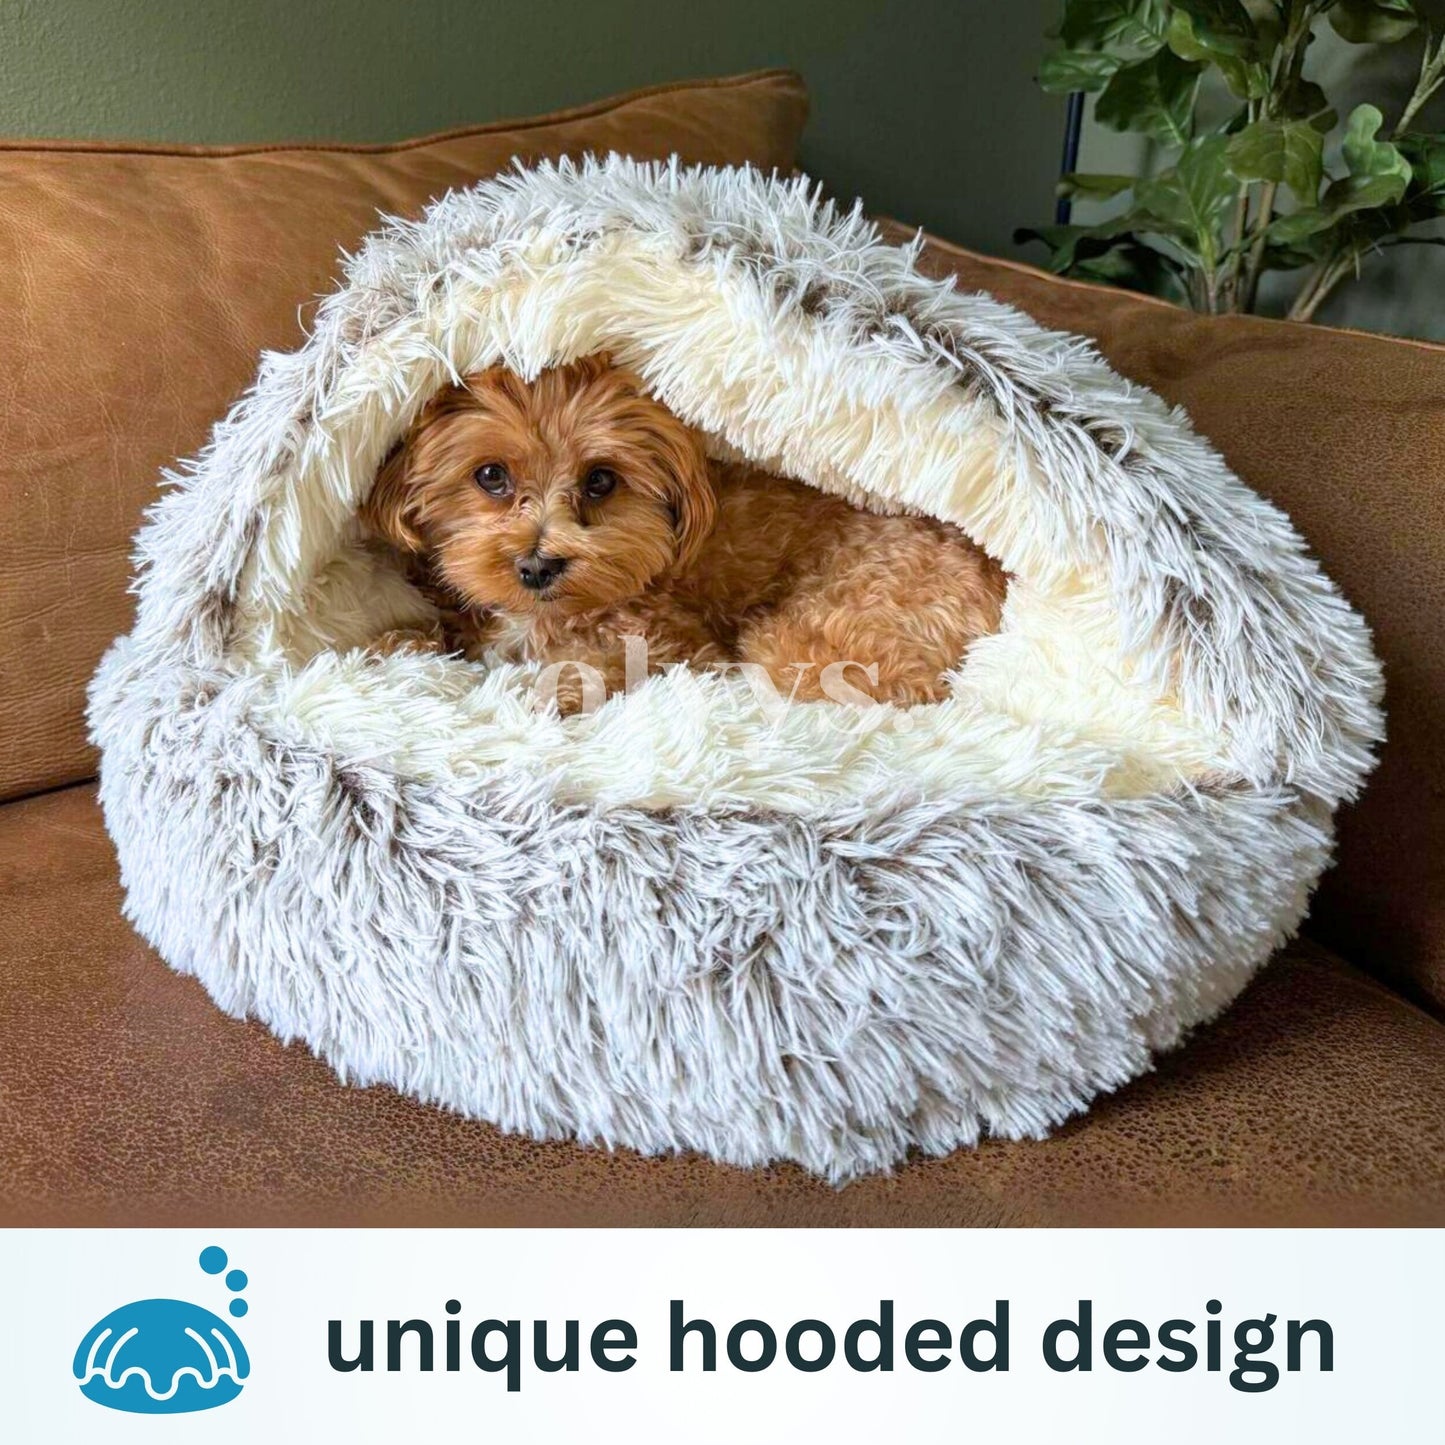 cozy cocoon - pet bed